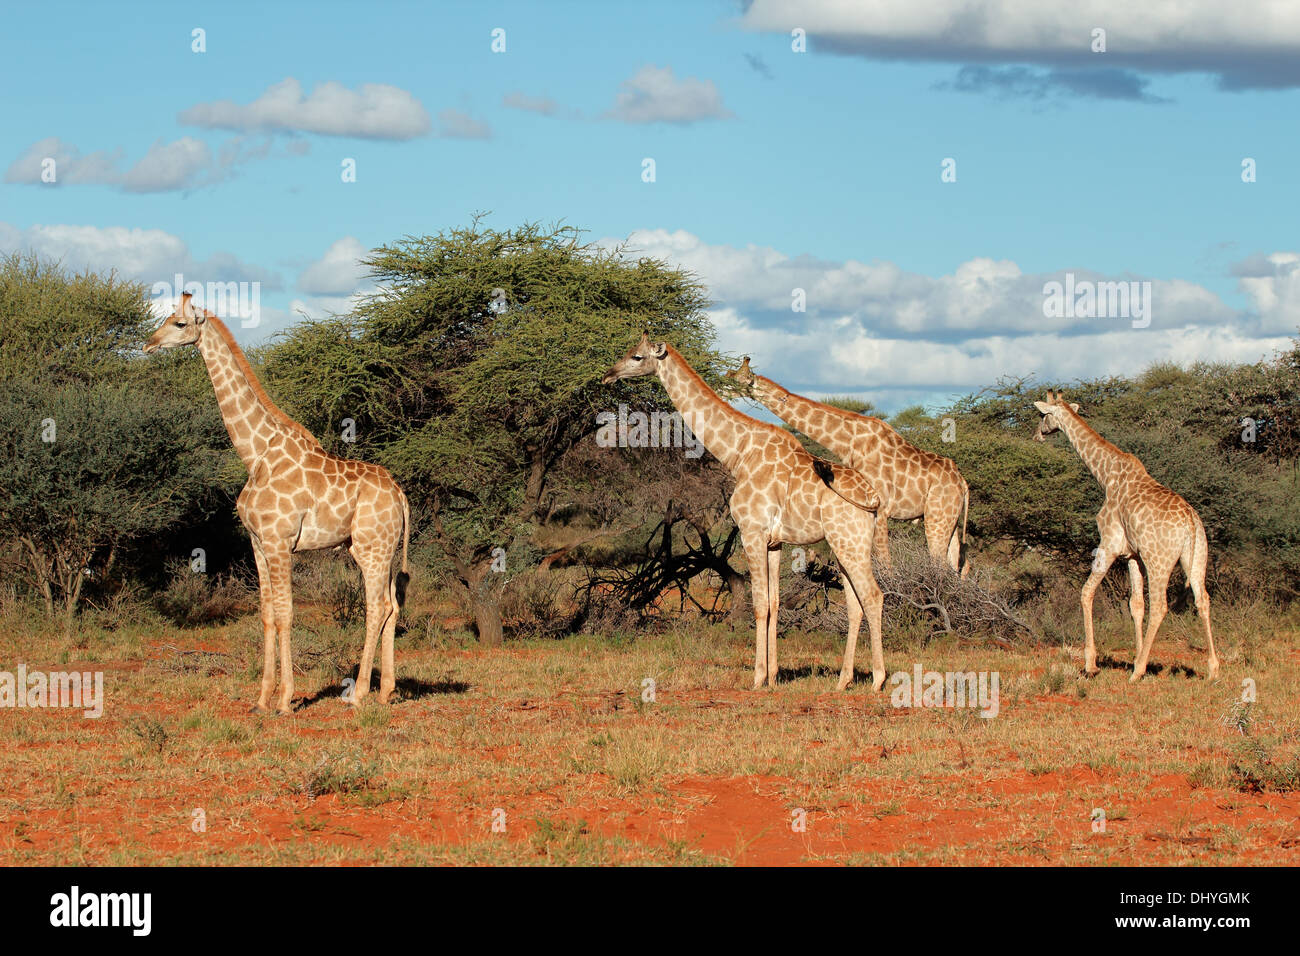 Group of giraffes (Giraffa camelopardalis), South Africa Stock Photo